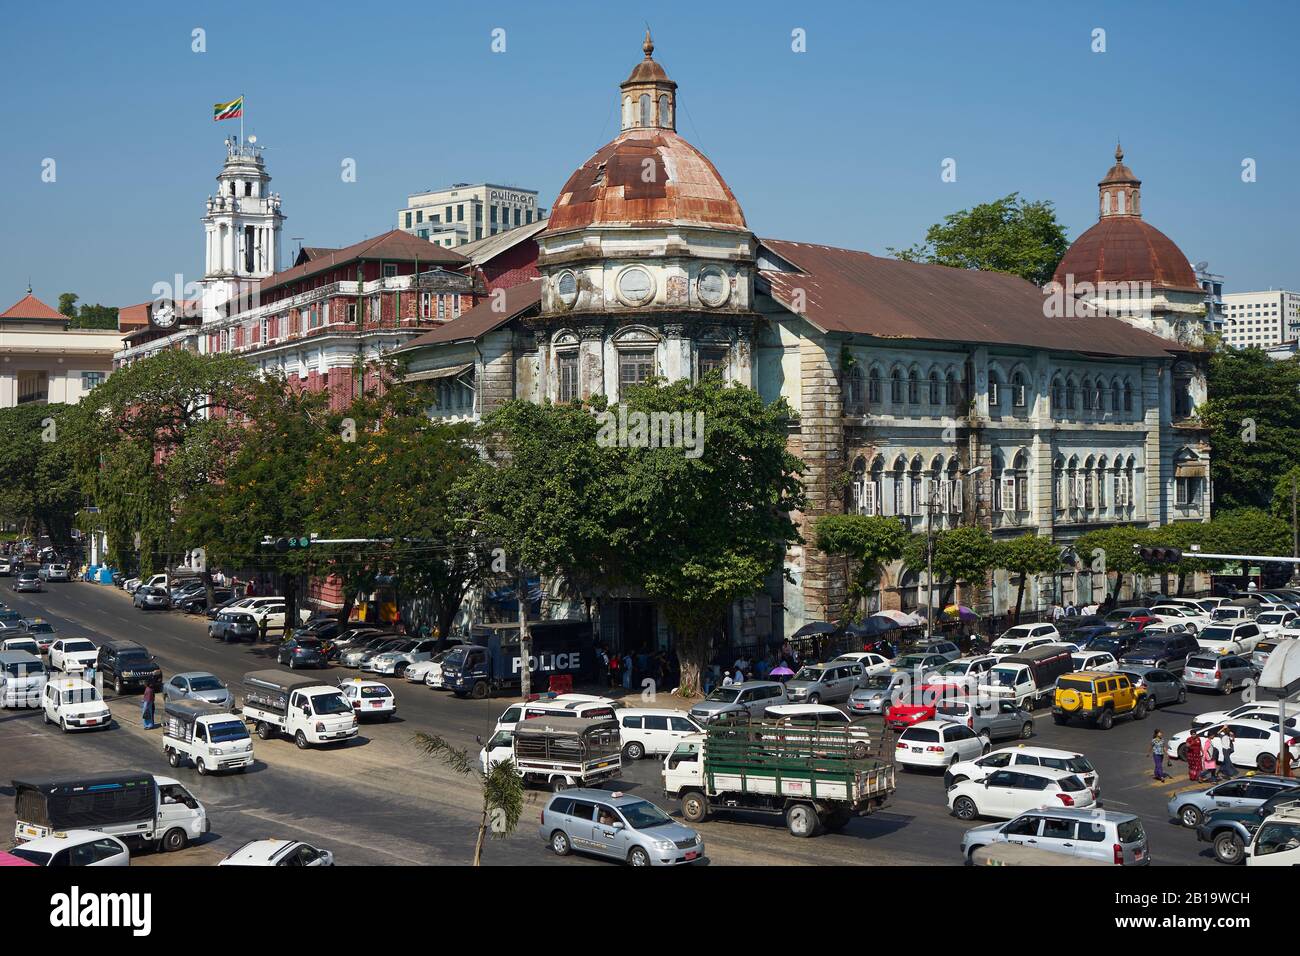 Yangon Division Court, britisches Kolonialgebäude, Ecke Strand Road und Pansodan Street, Yangon, Myanmar Foto Stock